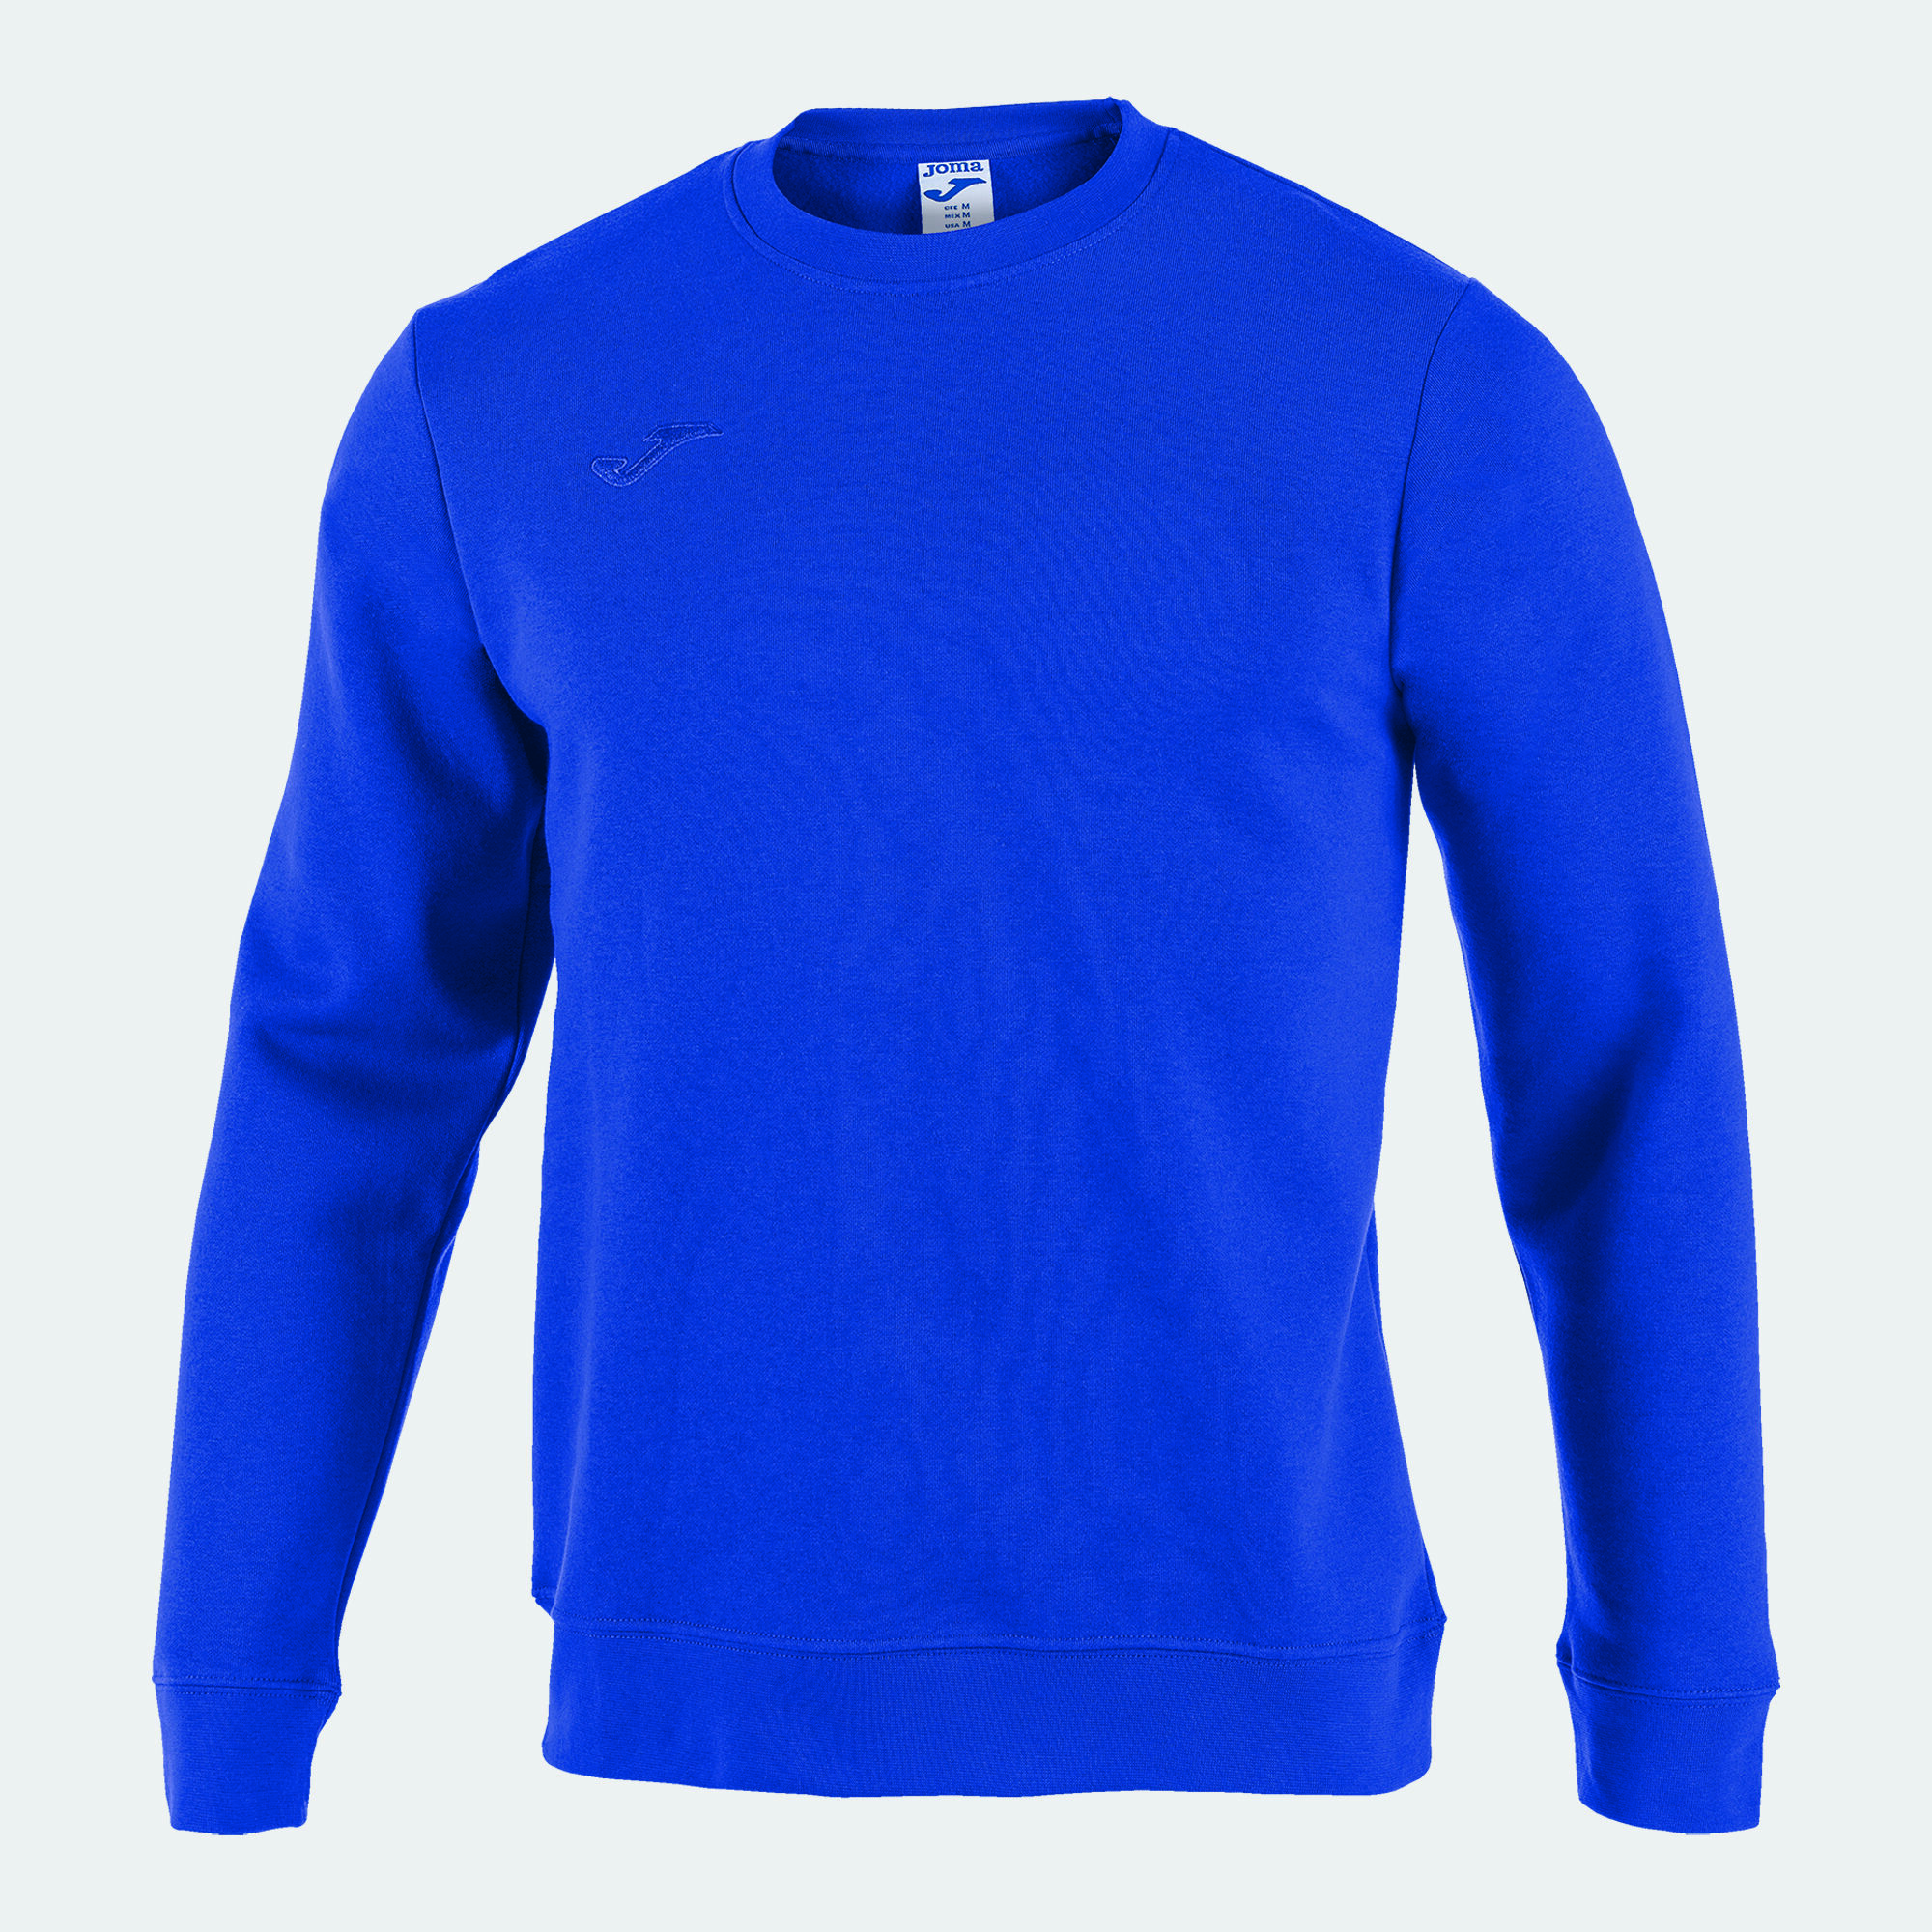 Sweatshirt man Santorini royal blue